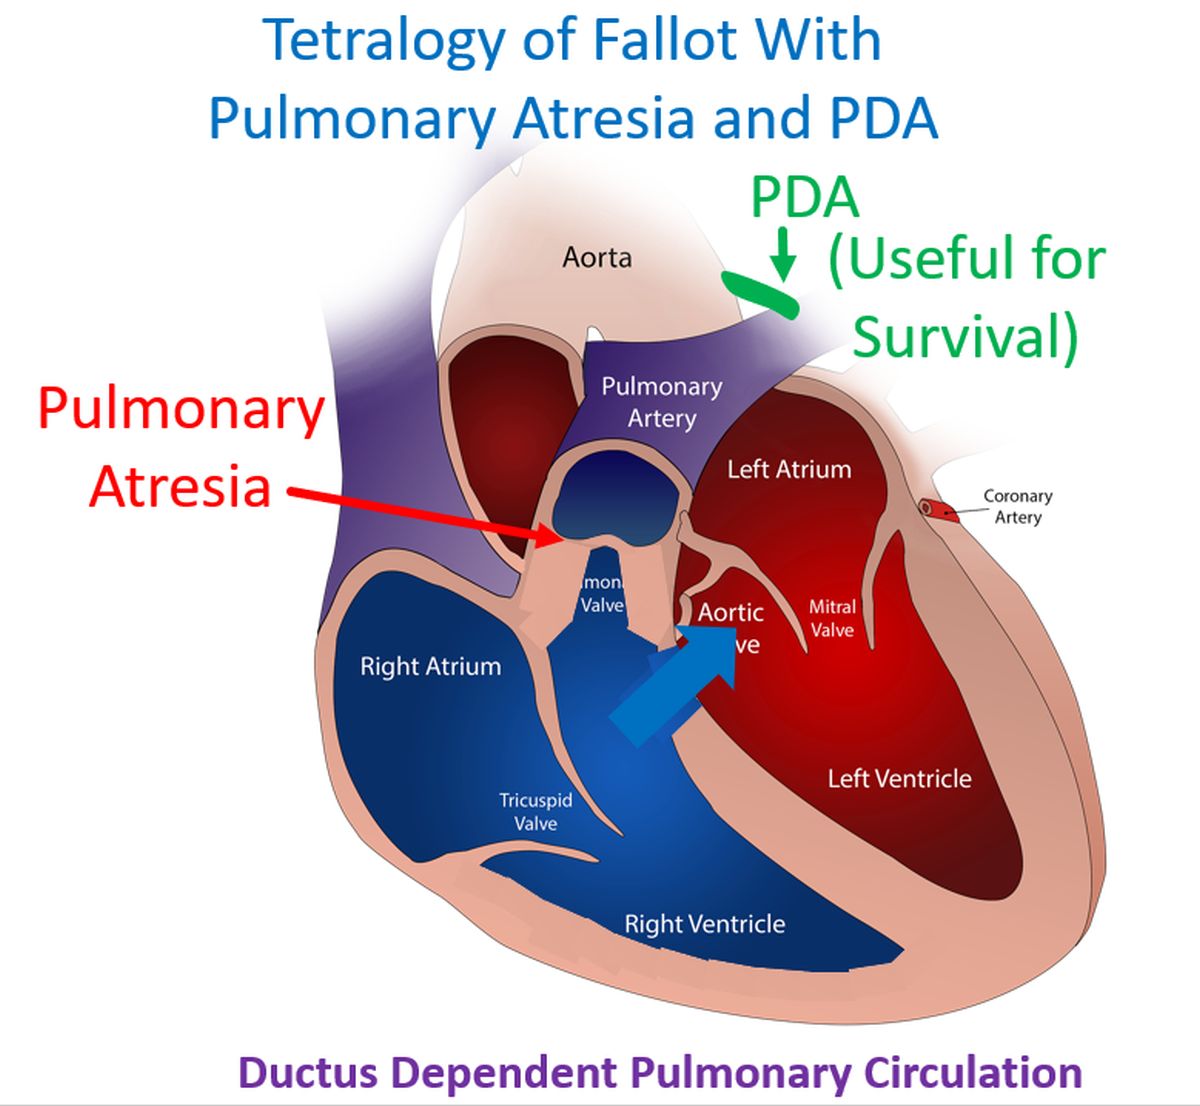 Ductus Dependent Pulmonary Circulation